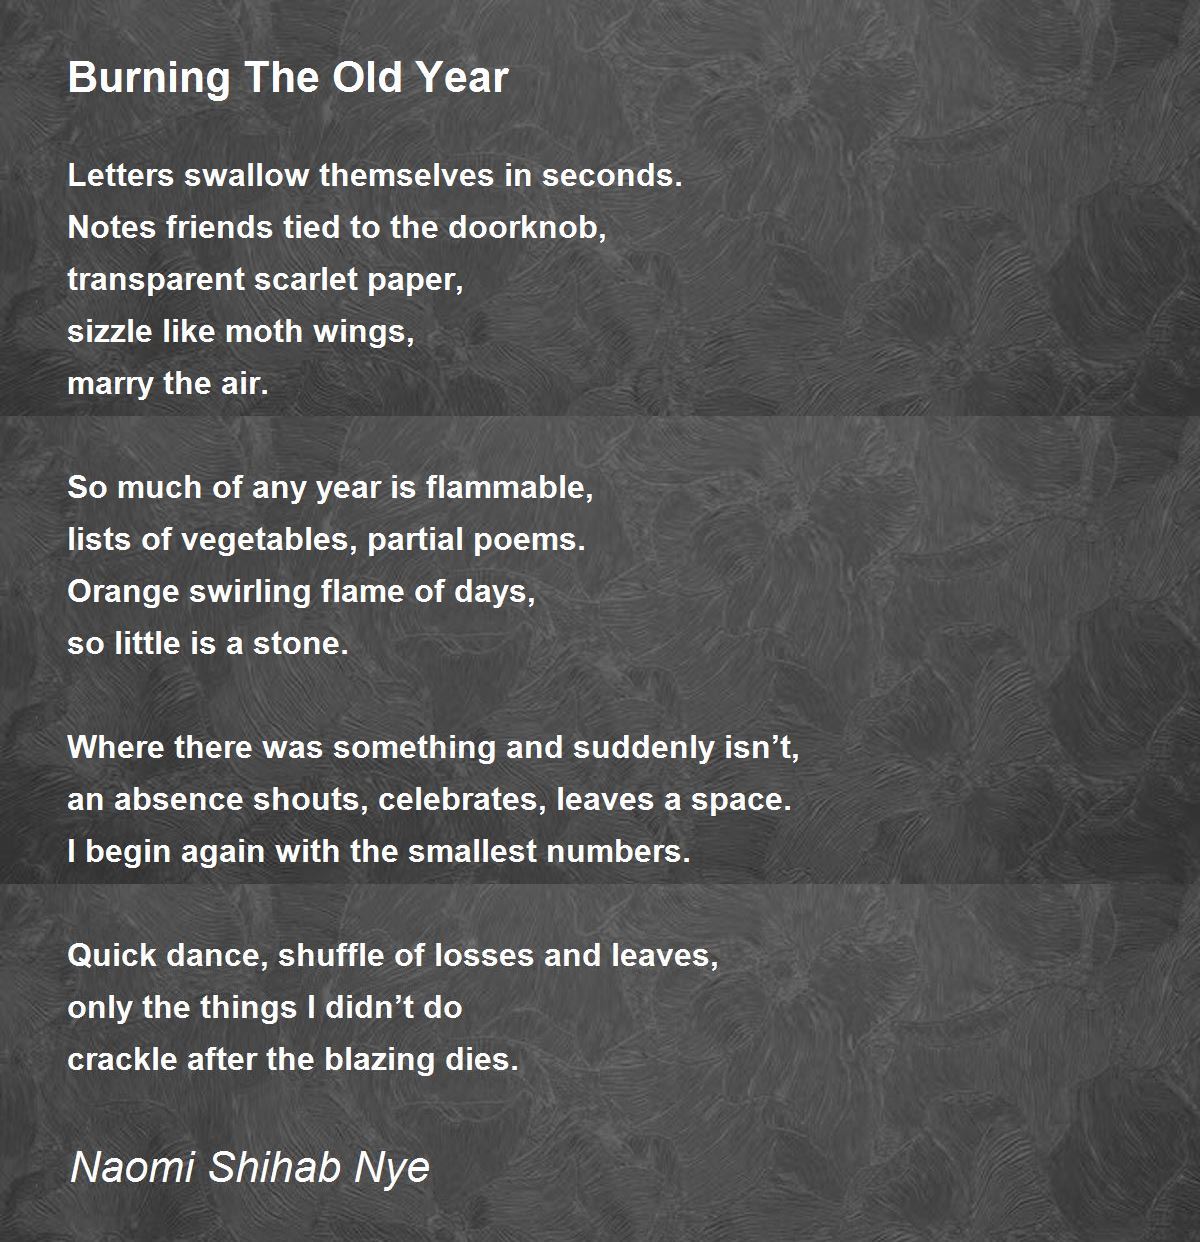 Burning The Old Year Poem by Naomi Shihab Nye - Poem Hunter